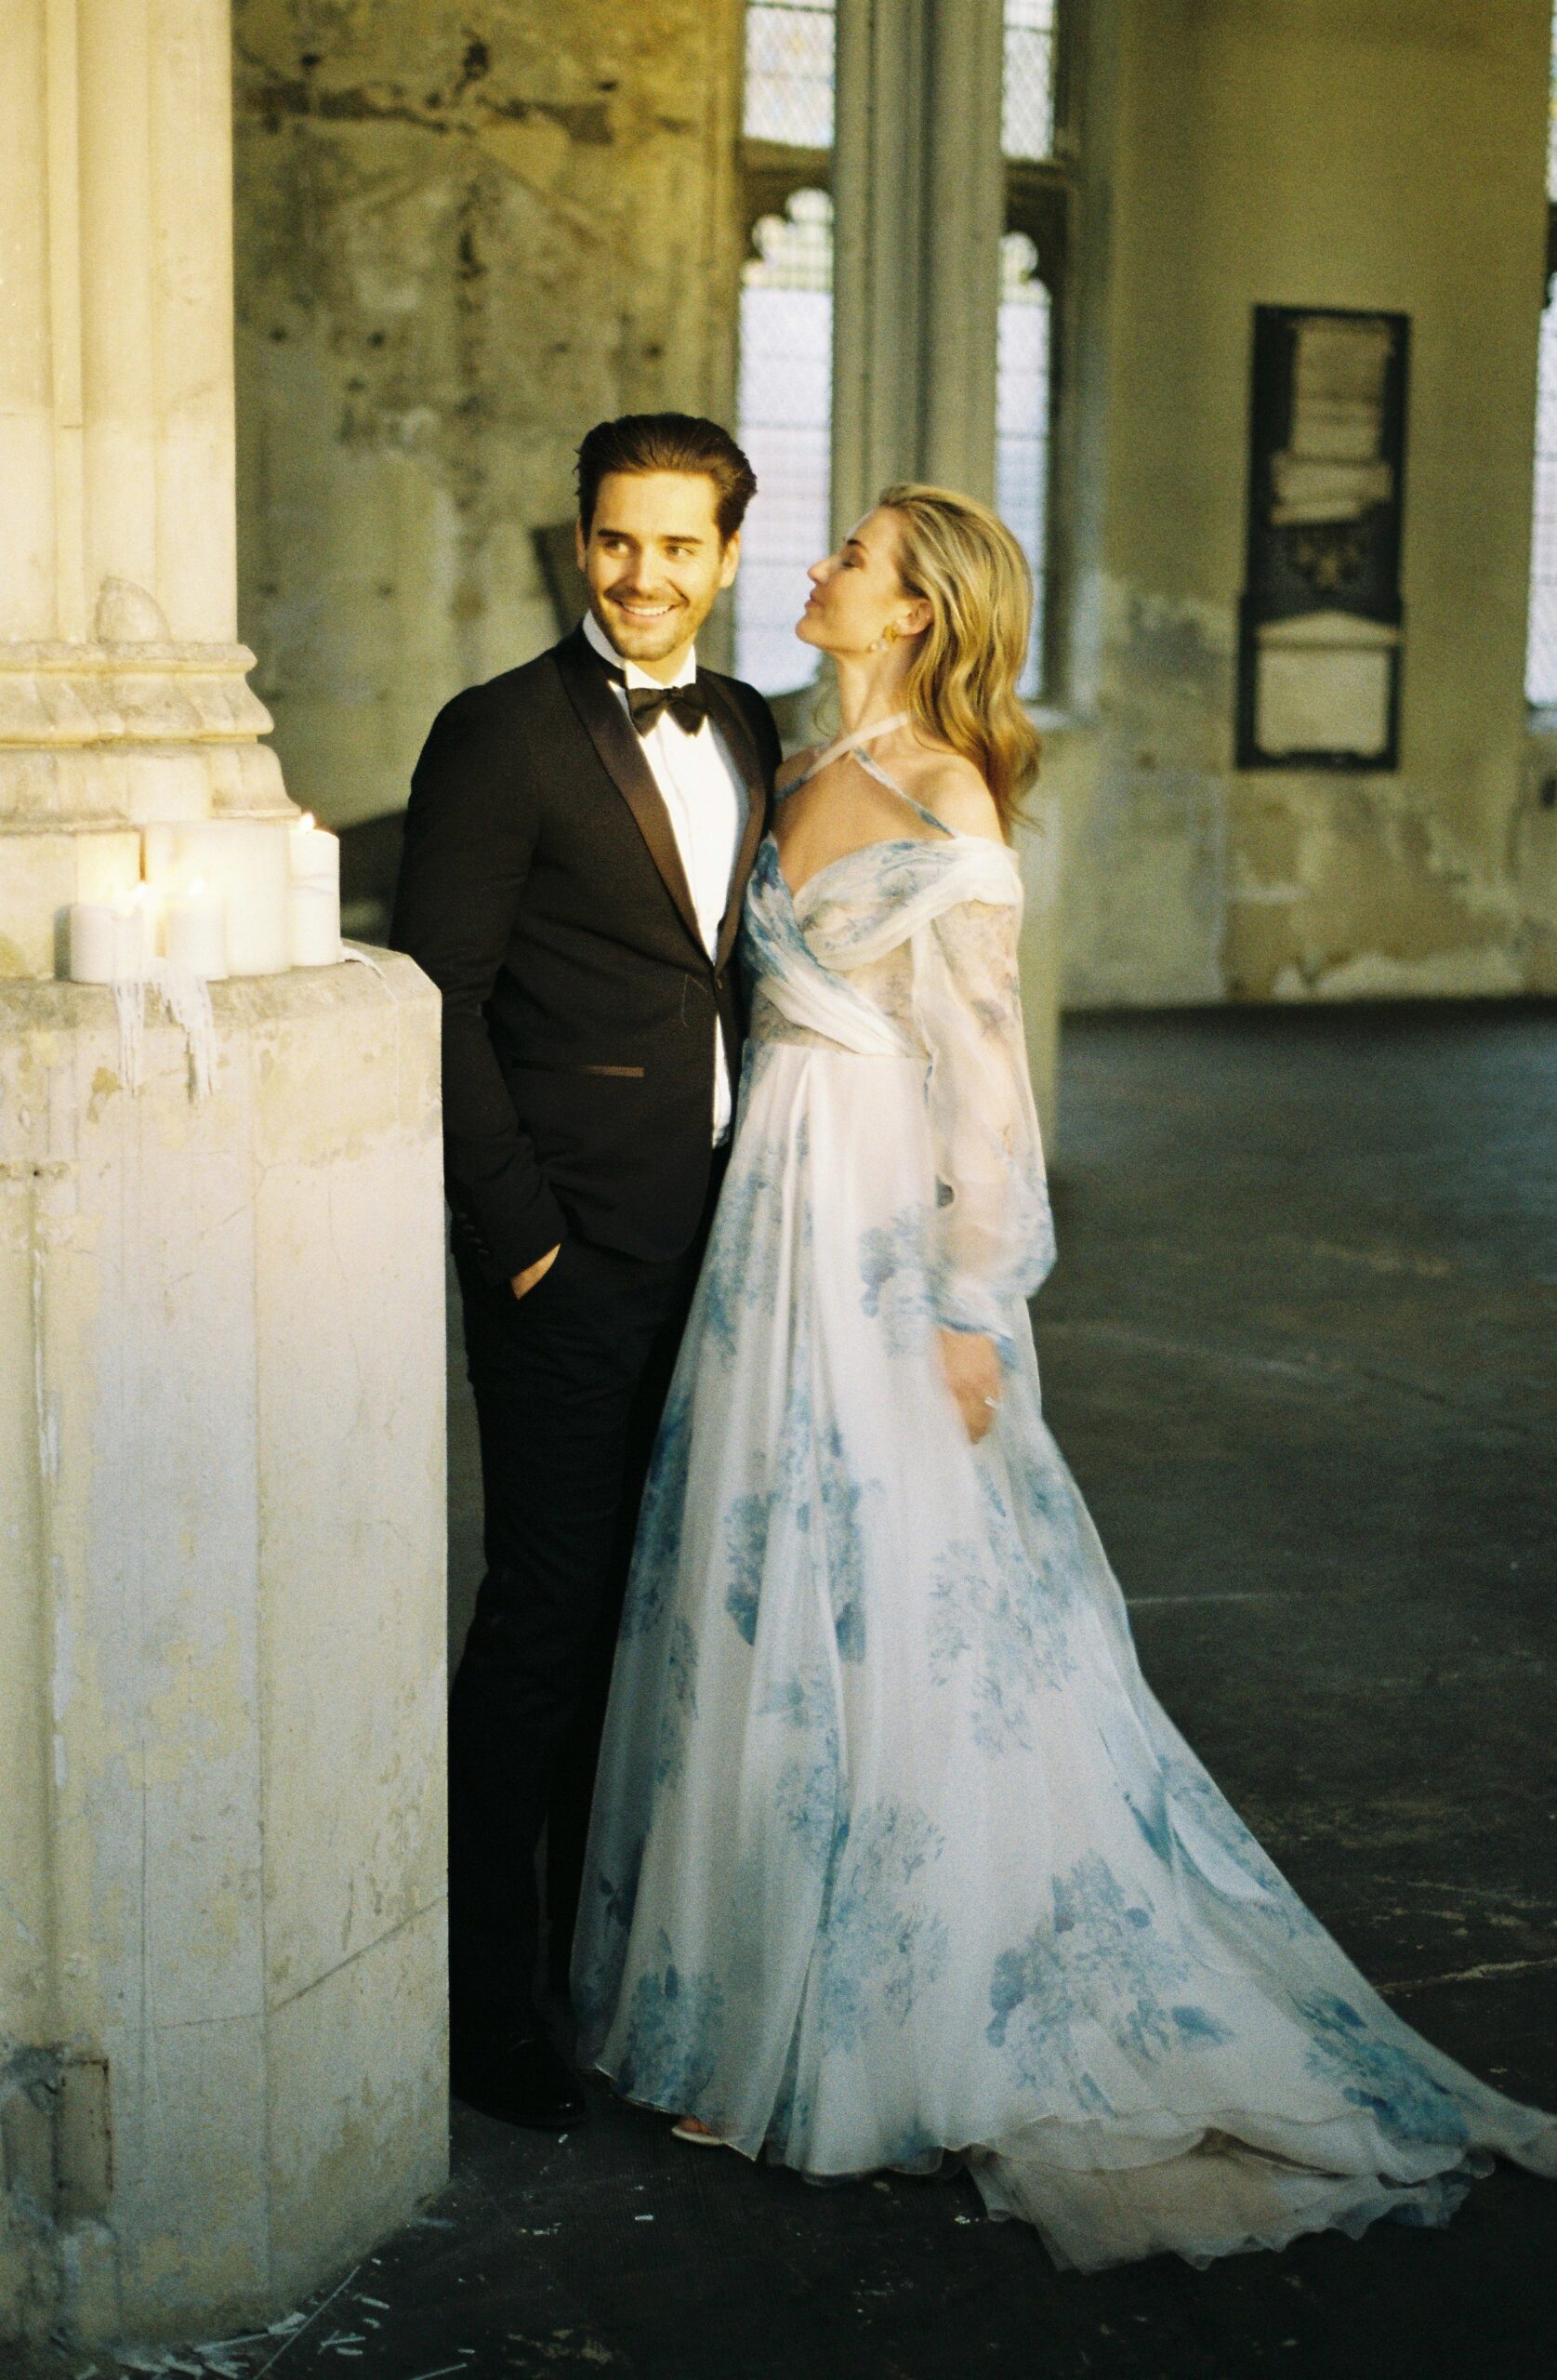 Luxury wedding captured on 35mm film